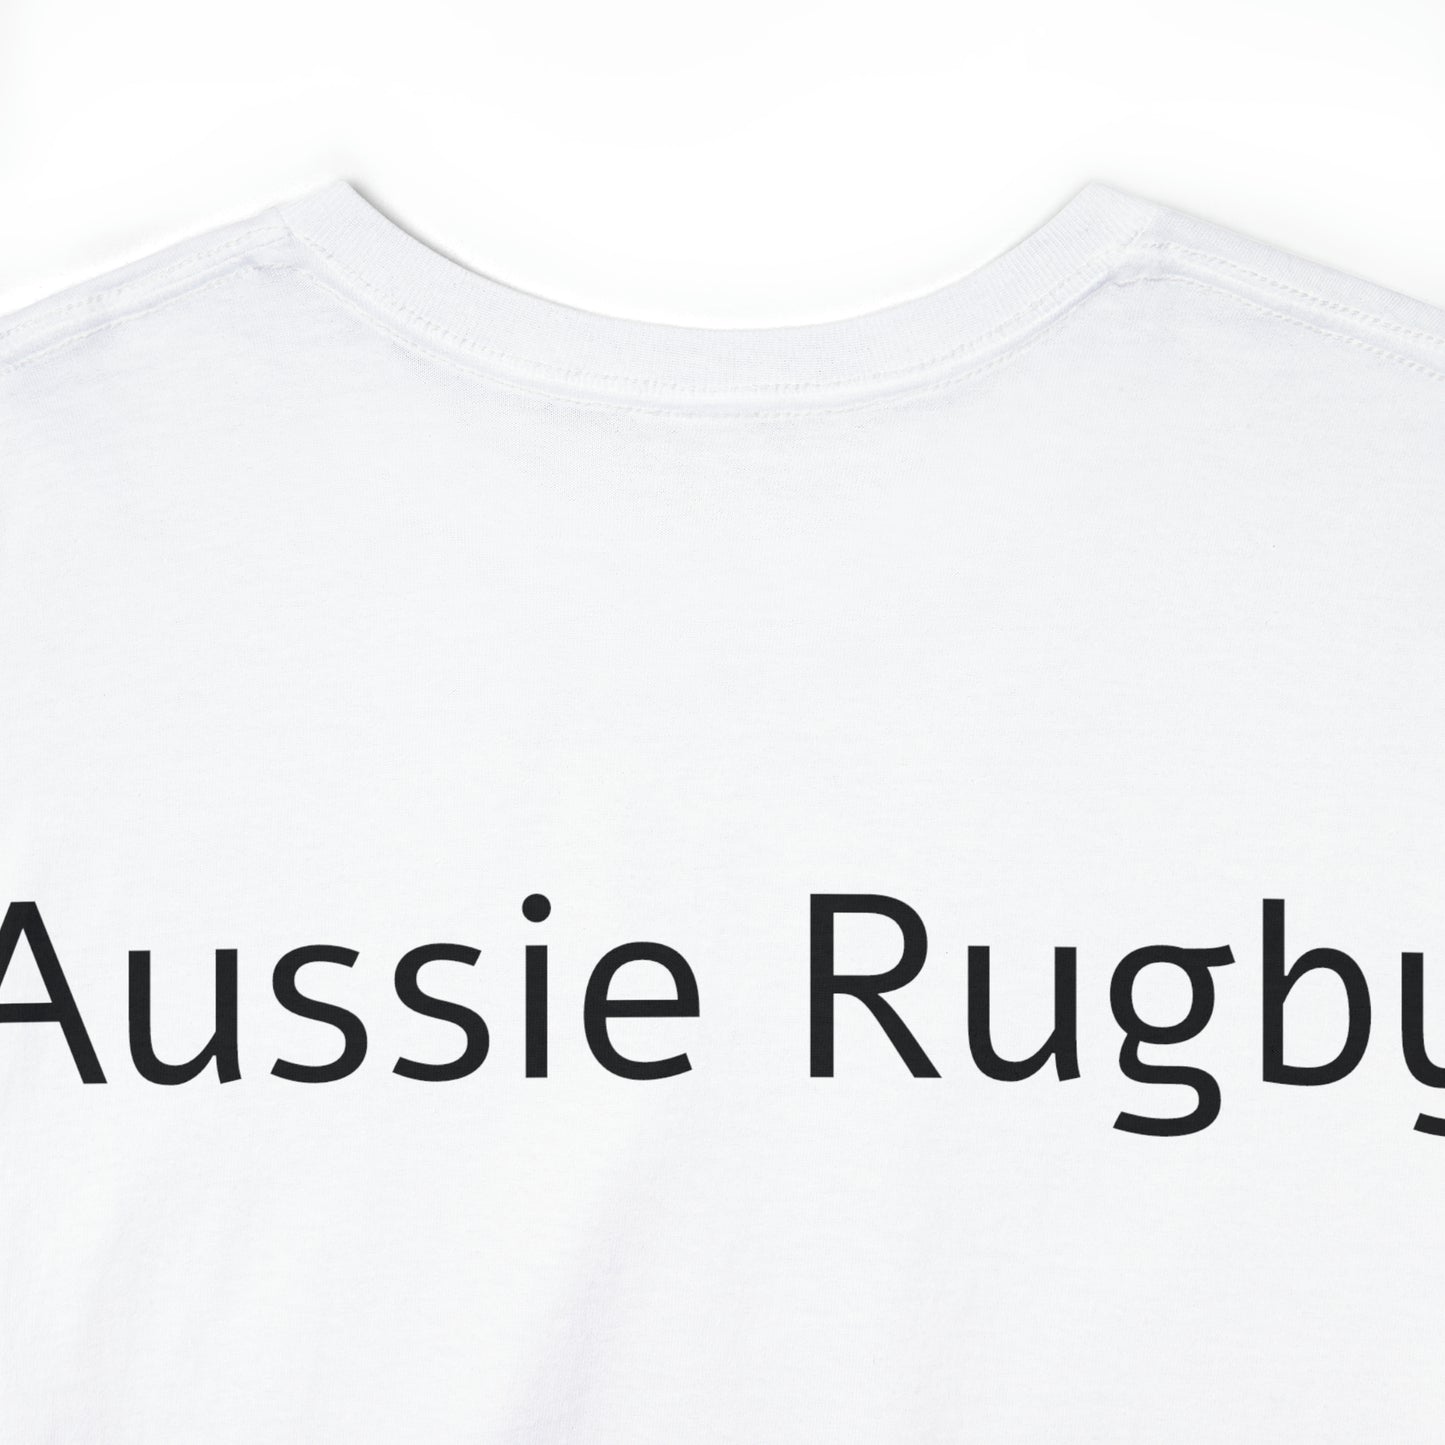 Australia celebrating with RWC - light shirts